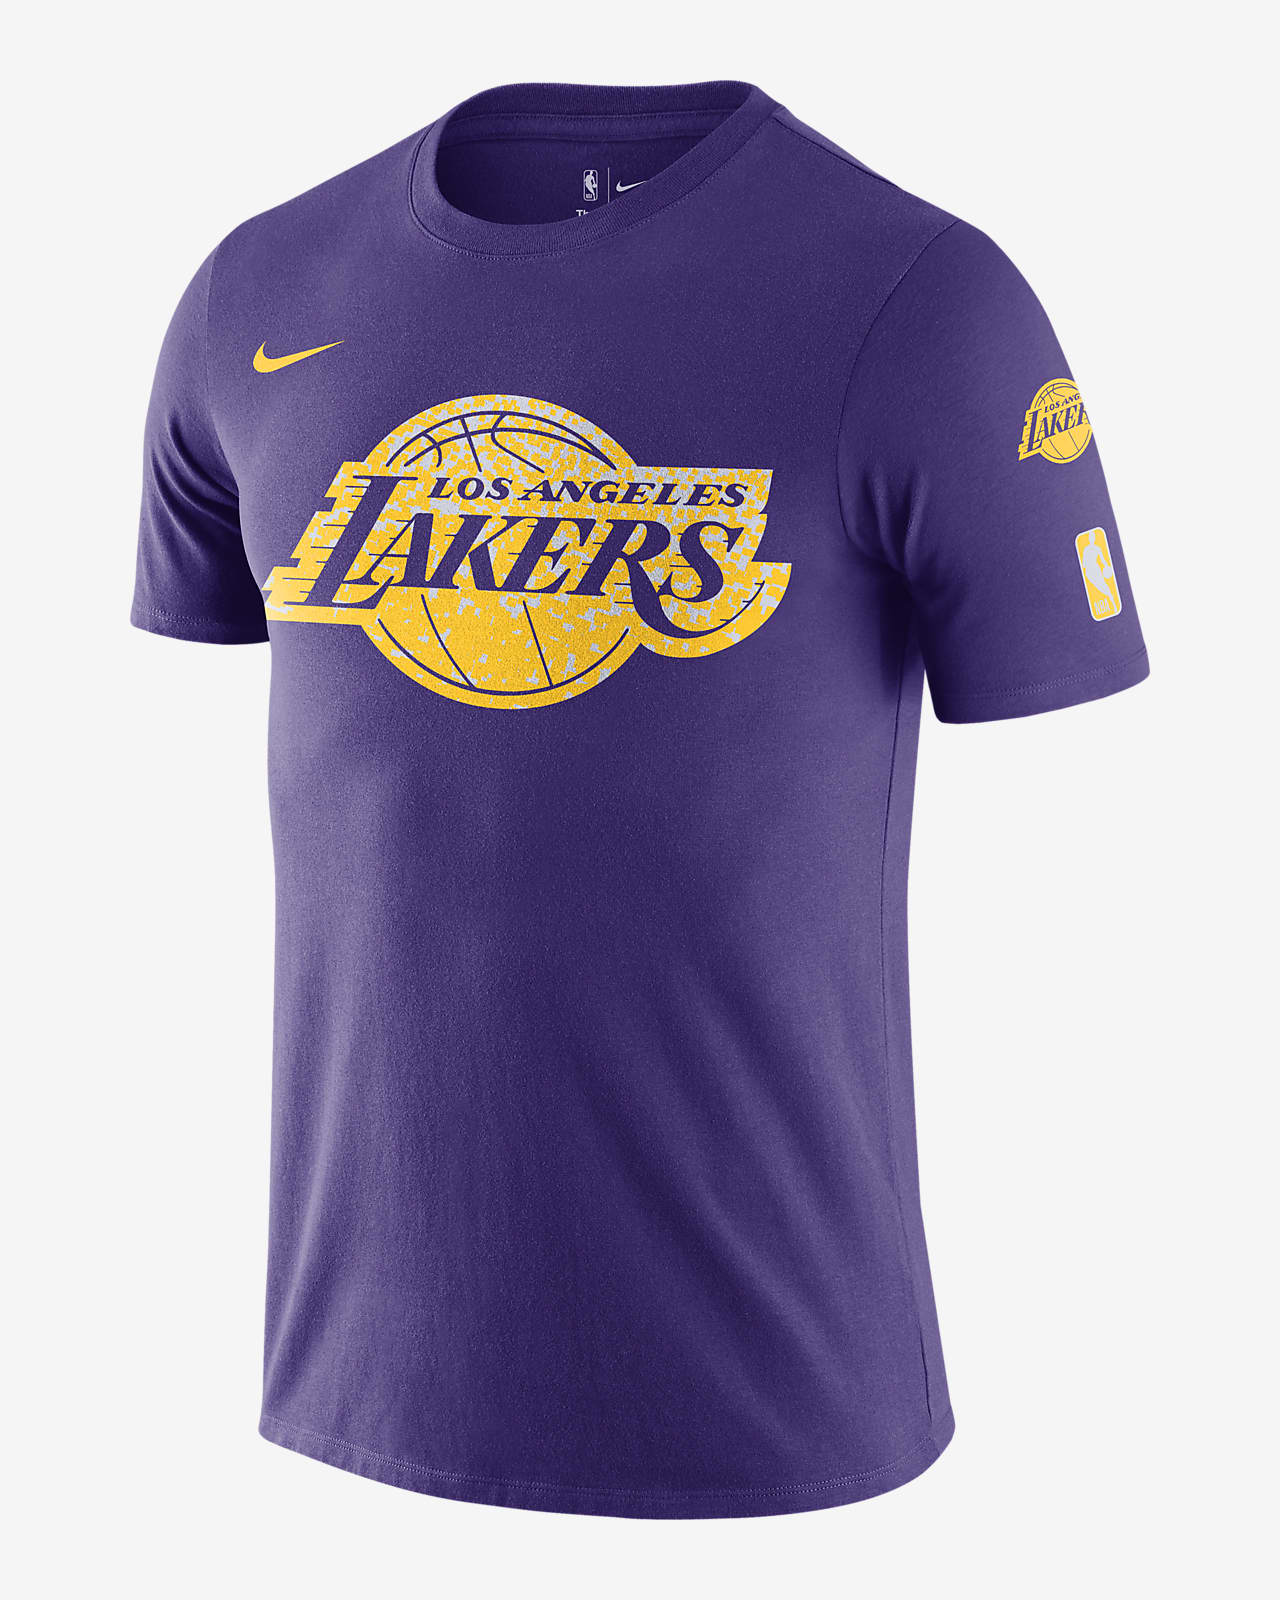 Playera Nike de la NBA para hombre Los Angeles Lakers Essential